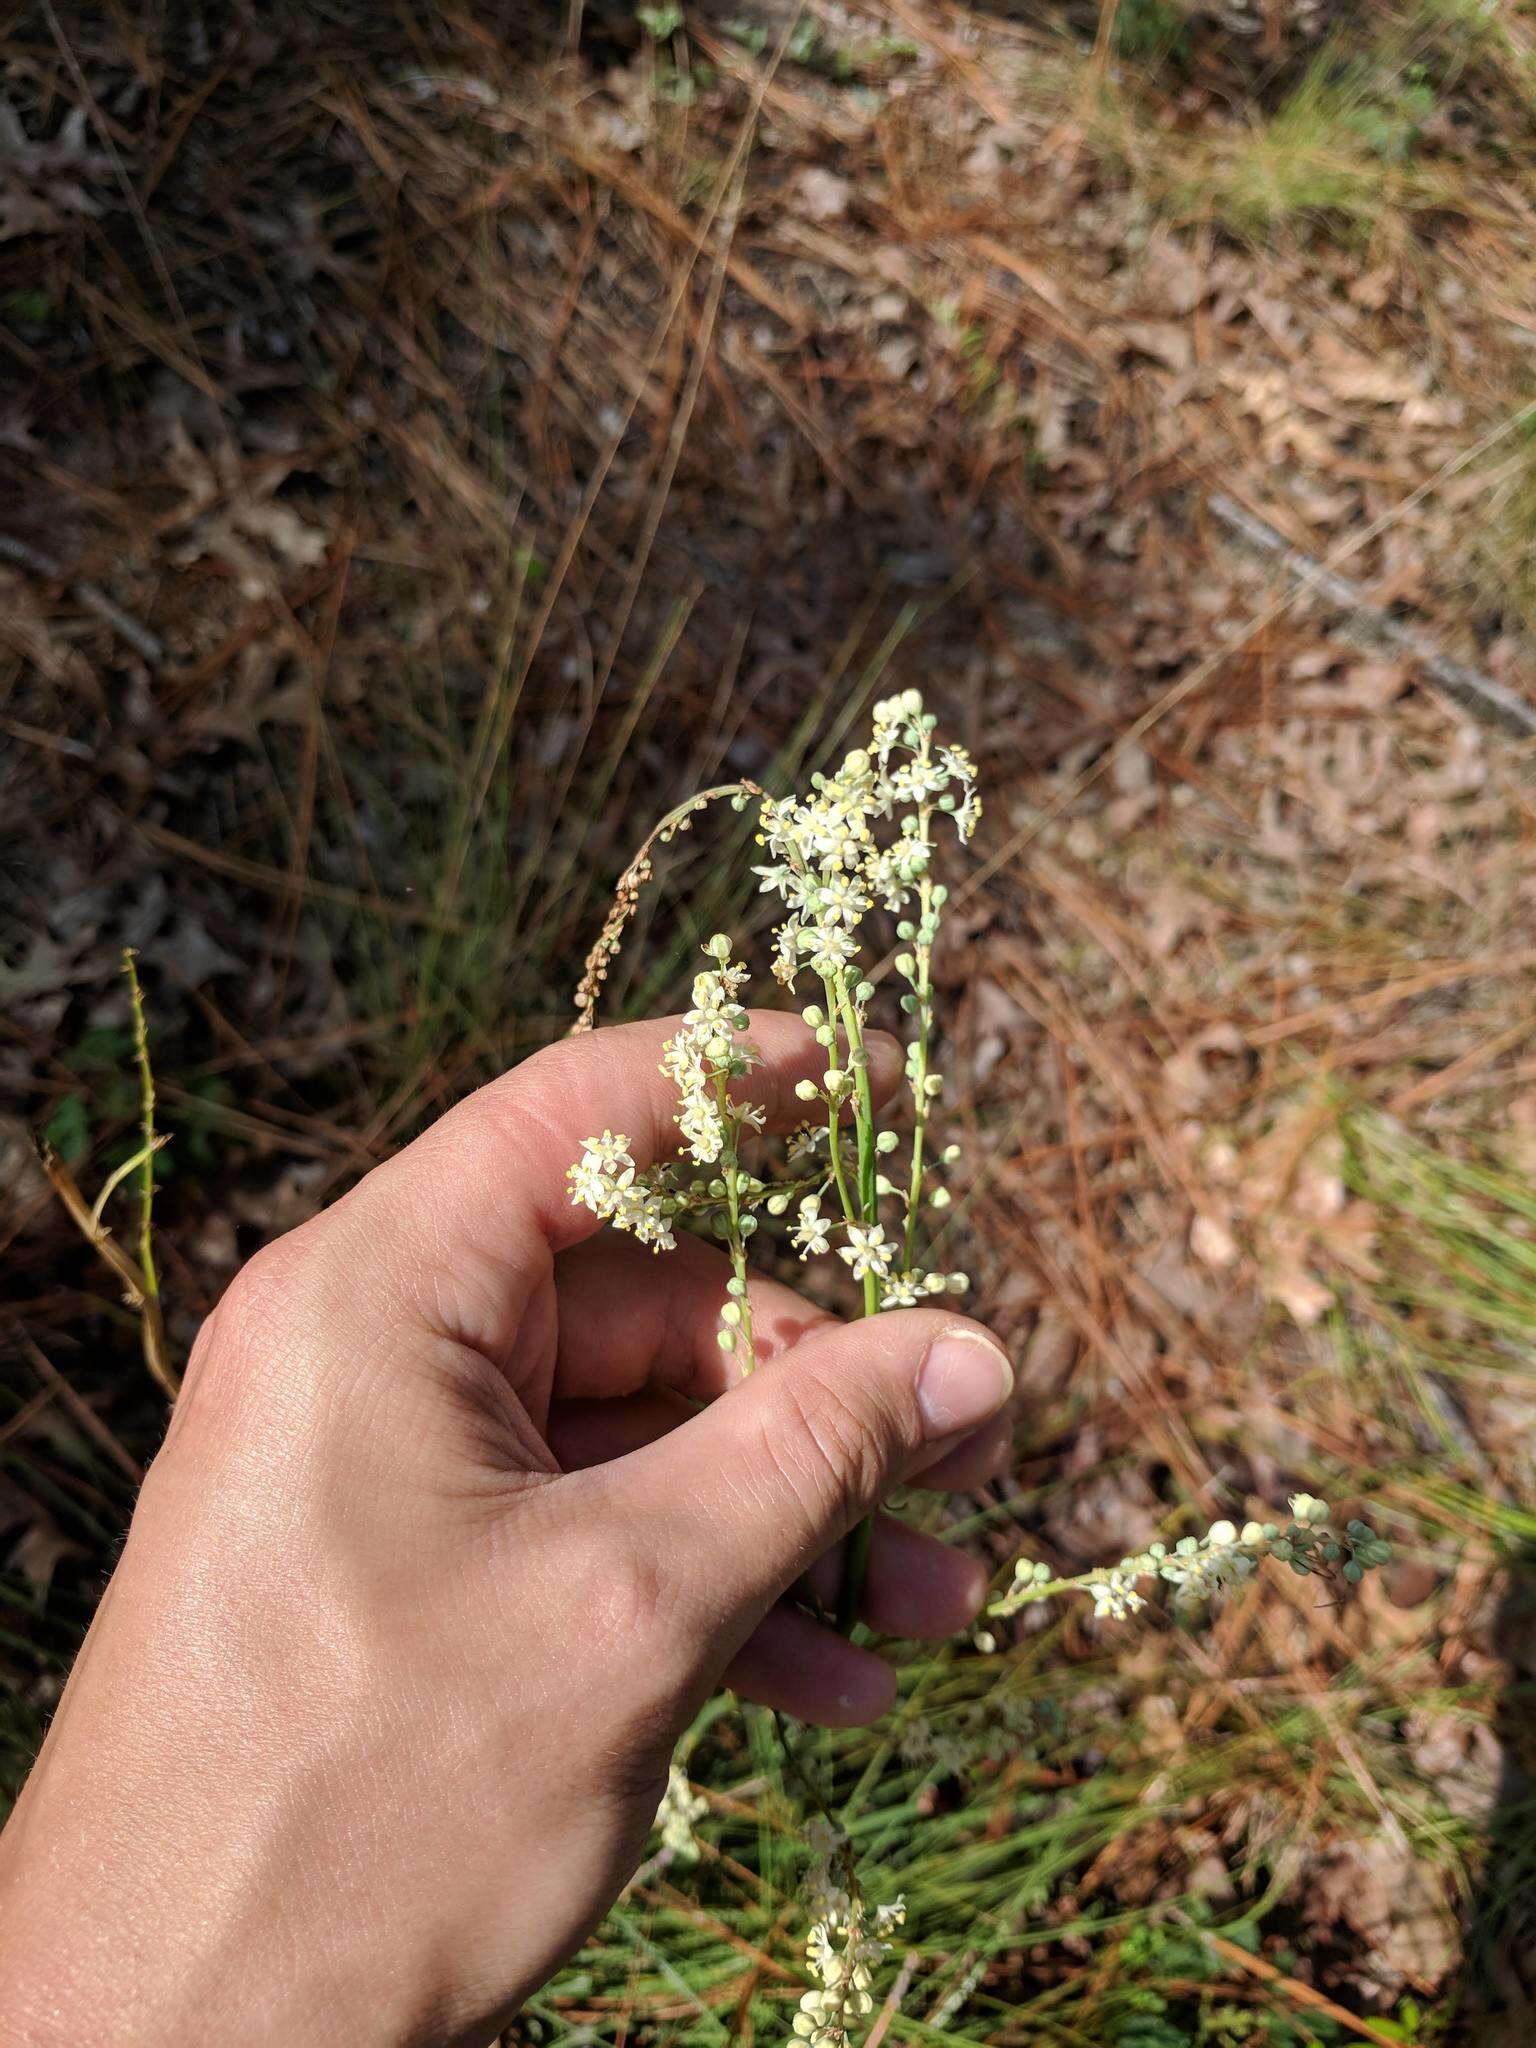 Image of Georgia beargrass